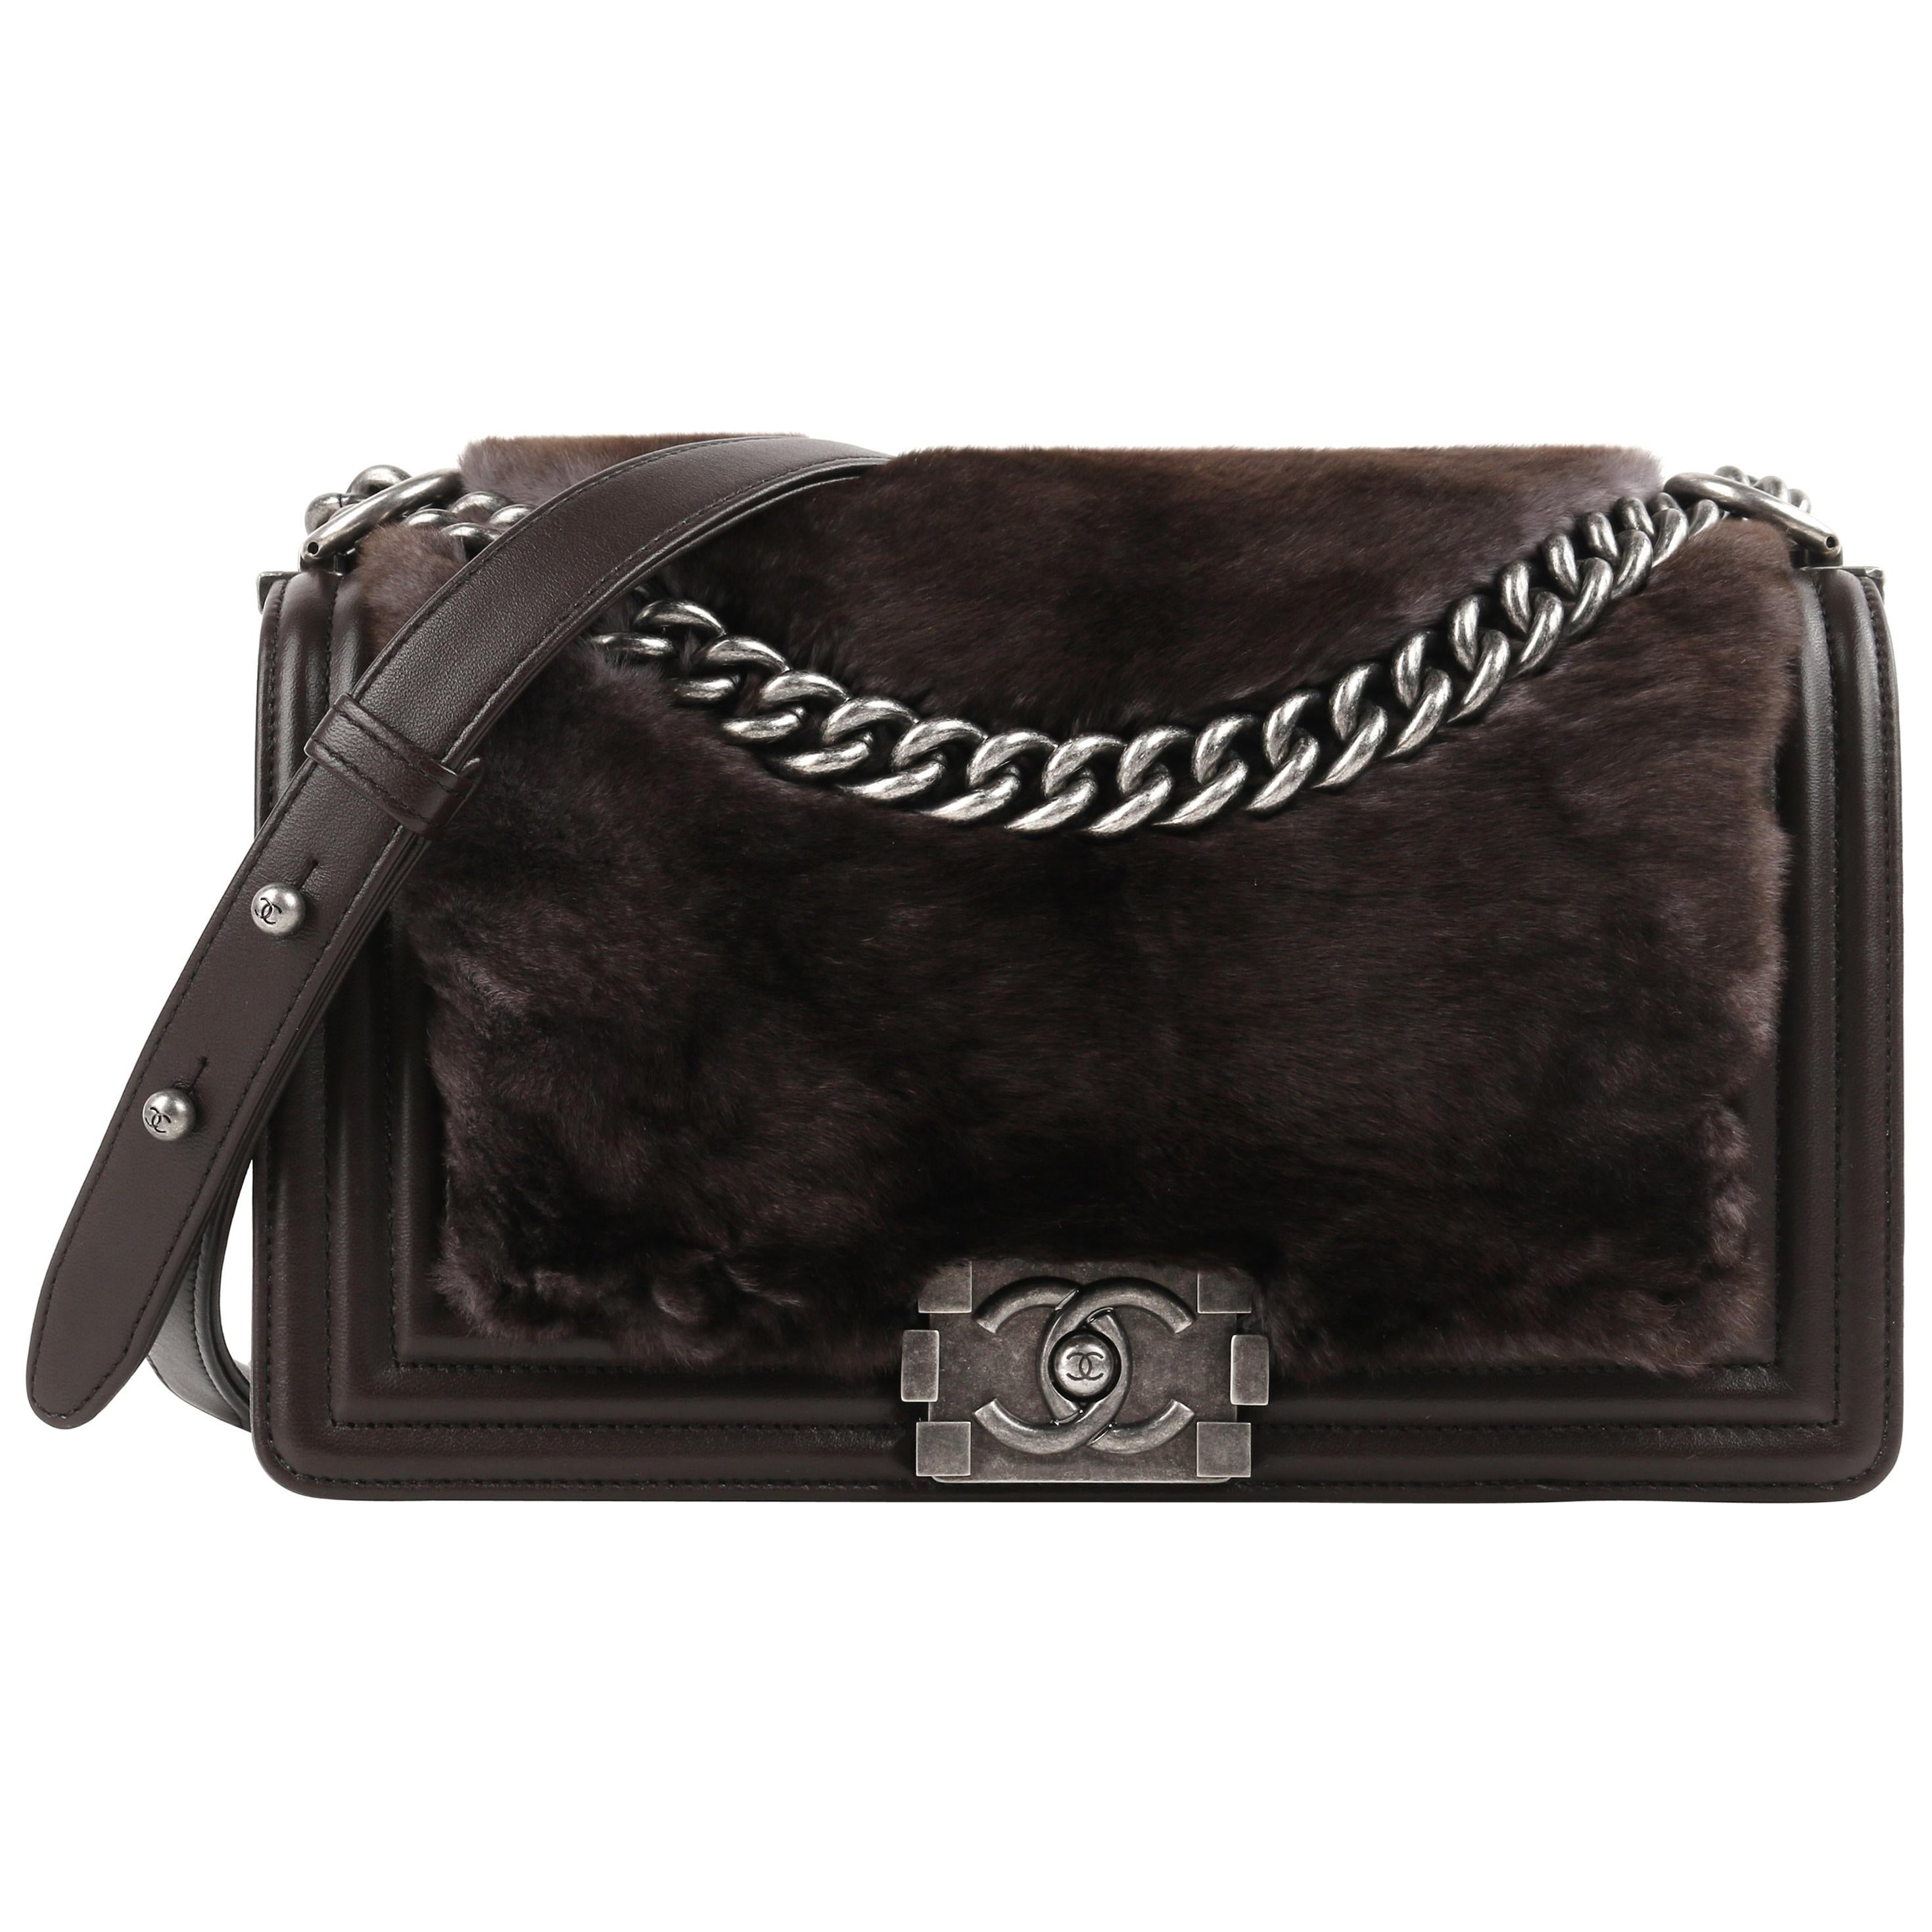 CHANEL "Medium Boy" Brown Leather Sheared Rabbit Fur Flap Bag Cross Body Handbag